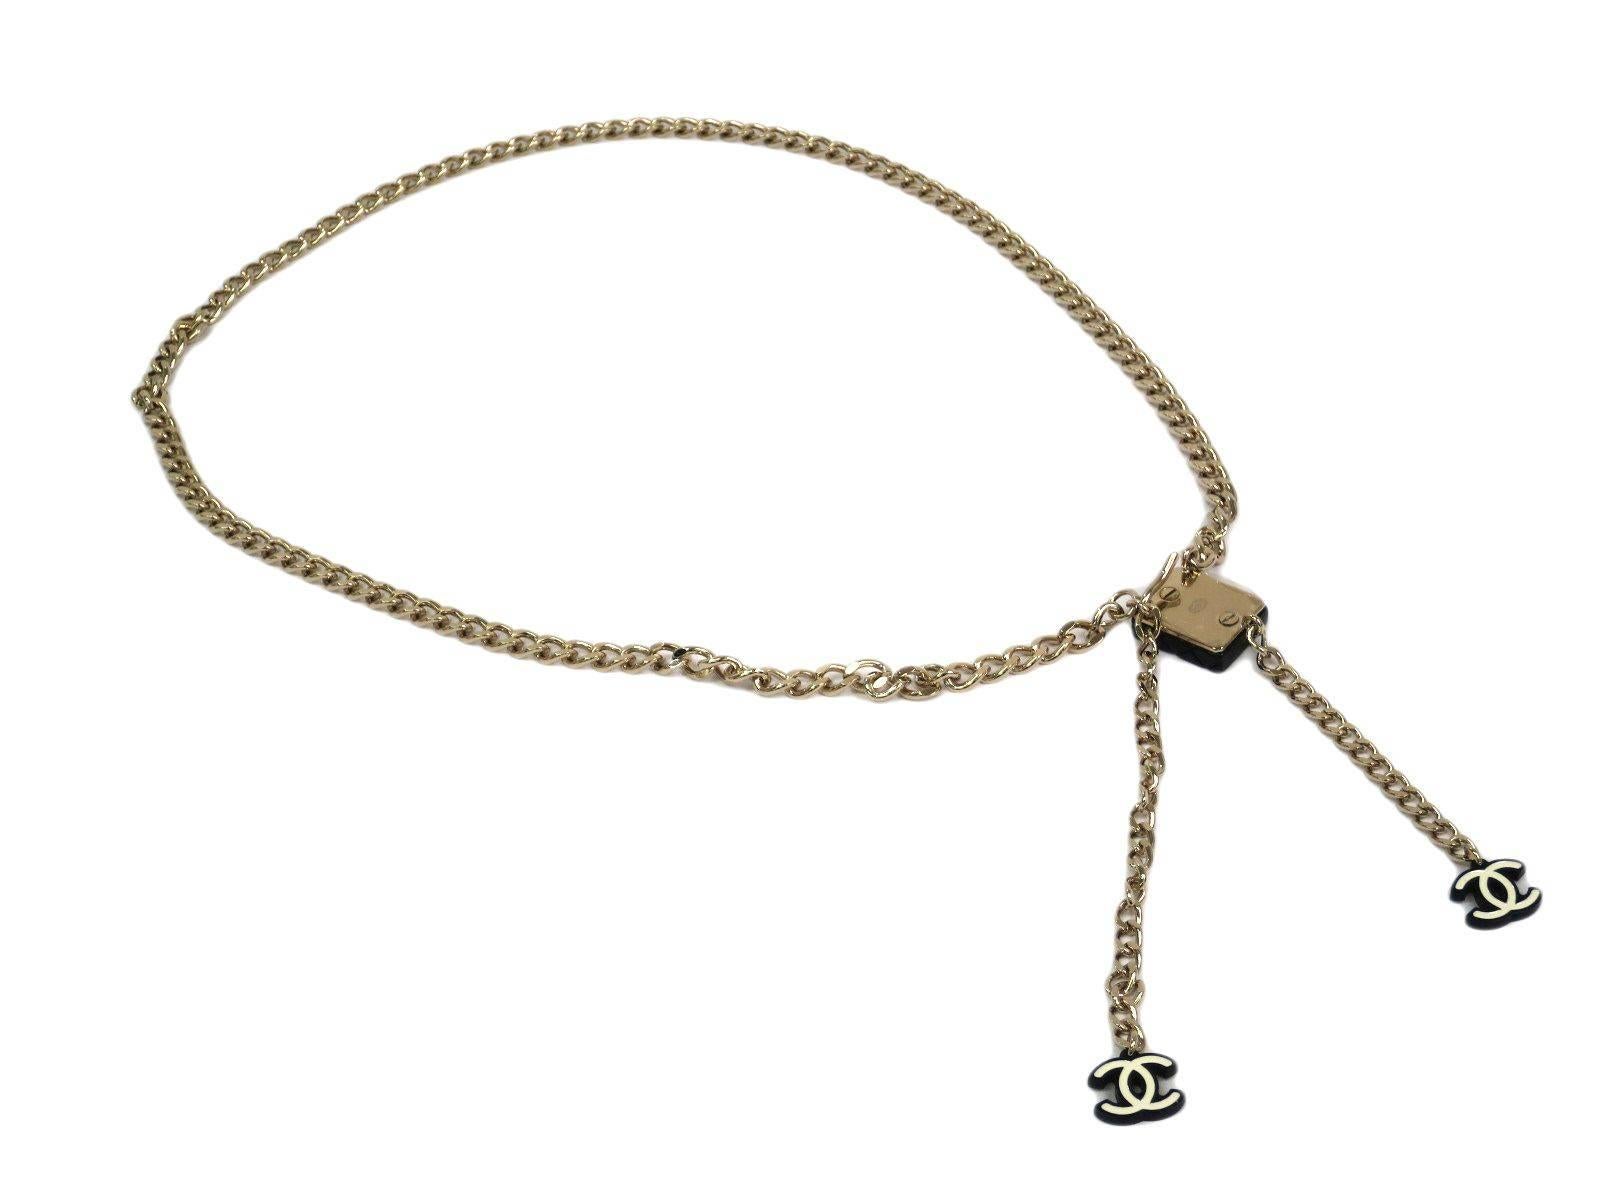 Women's Chanel CURRENT LIKE NEW Gold Multi Link Charm Waist Belt in Box